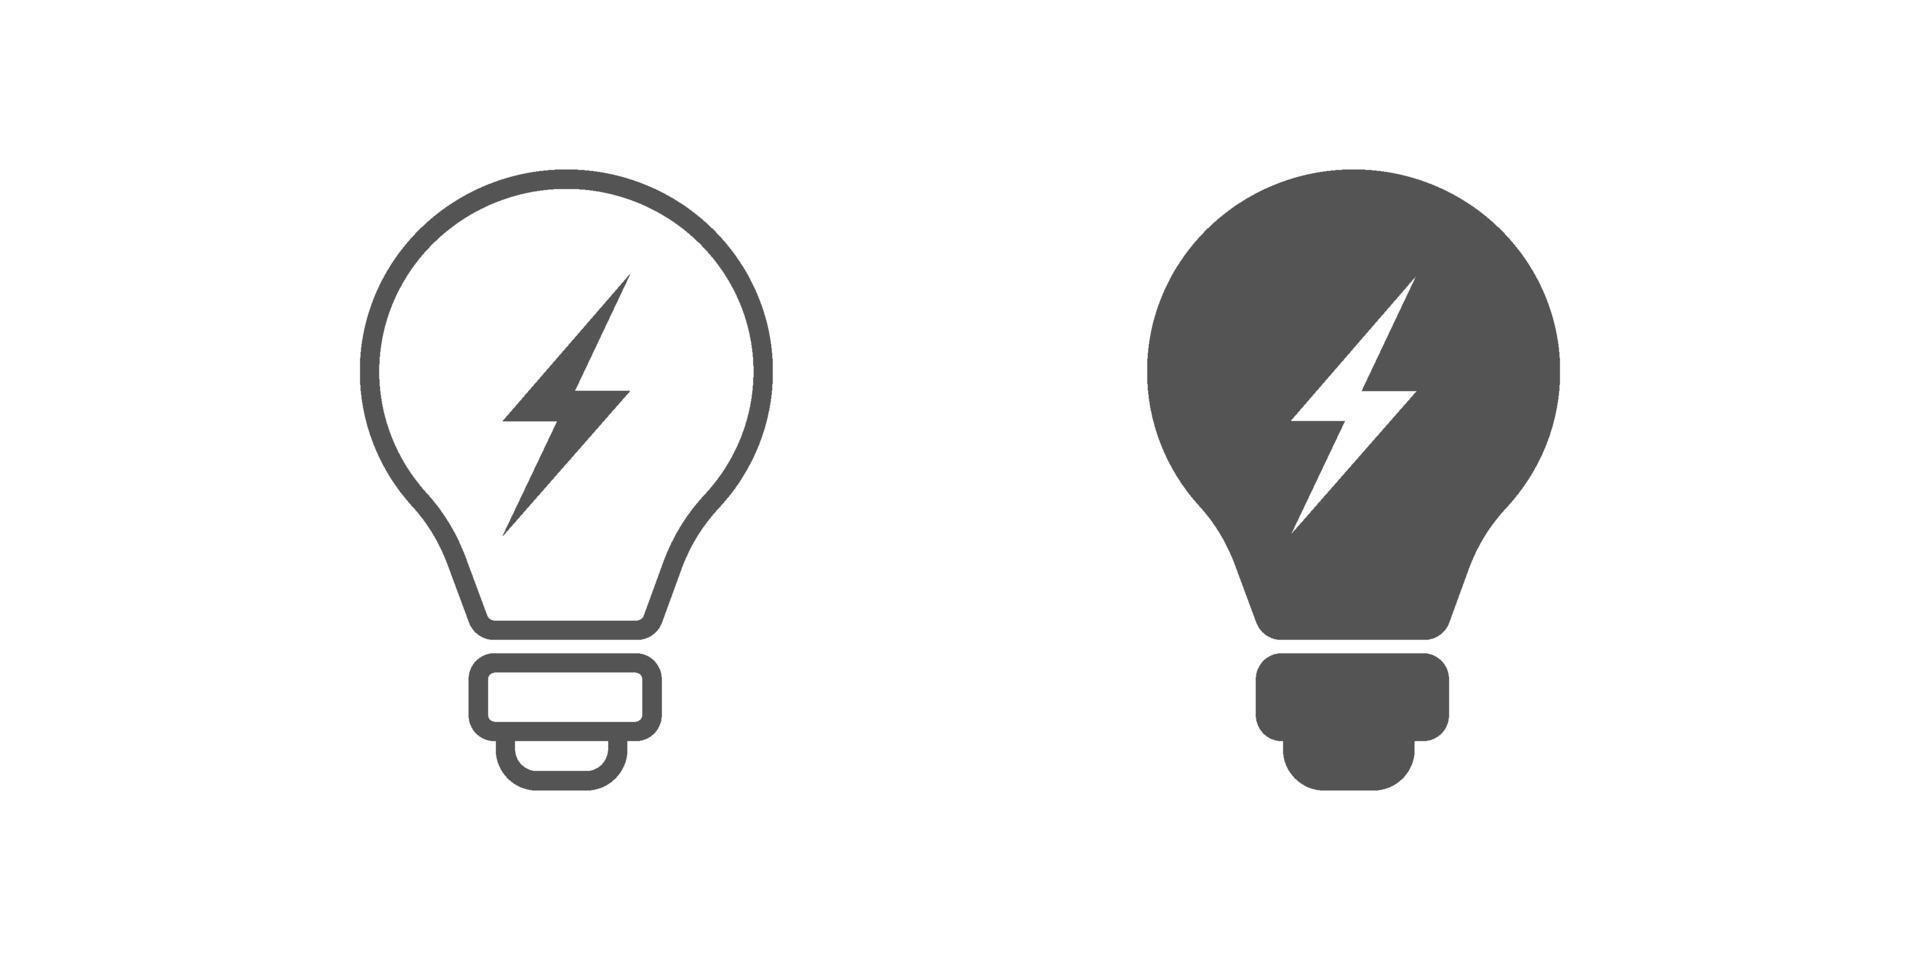 lightbulb icon flat style isolated on white background vector